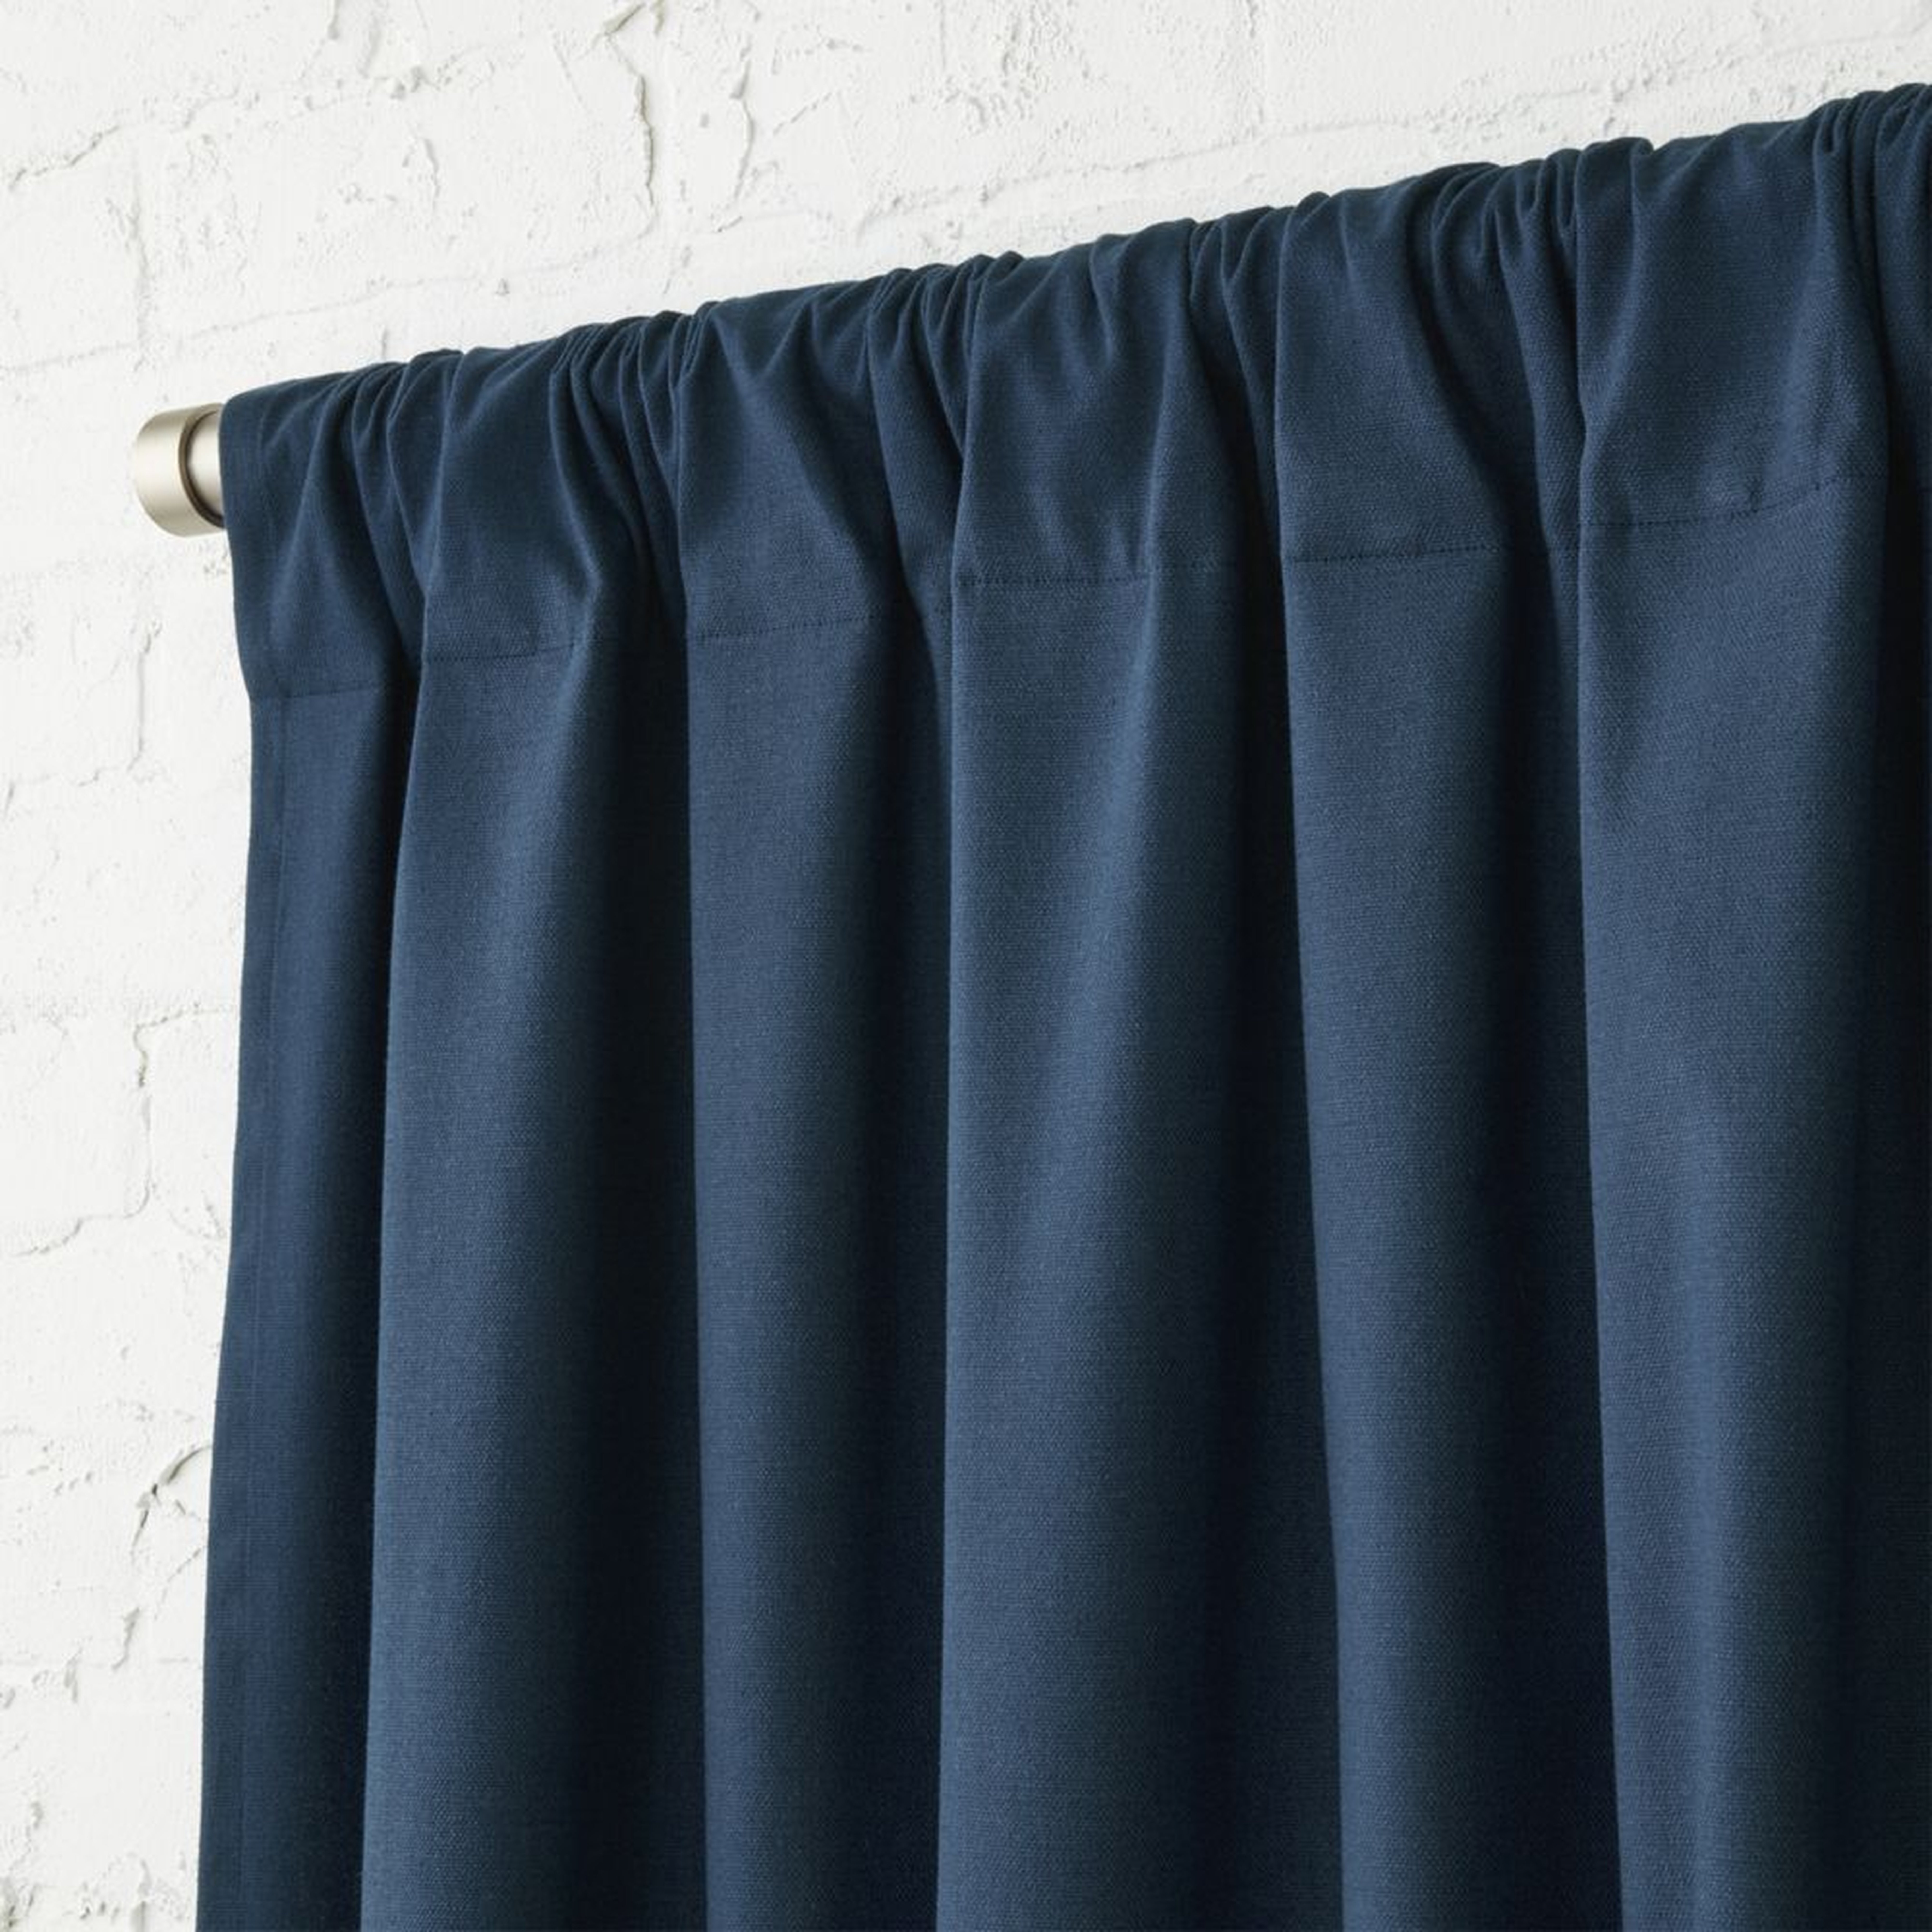 "Navy Blue Basketweave II Curtain Panel 48""x108""" - CB2